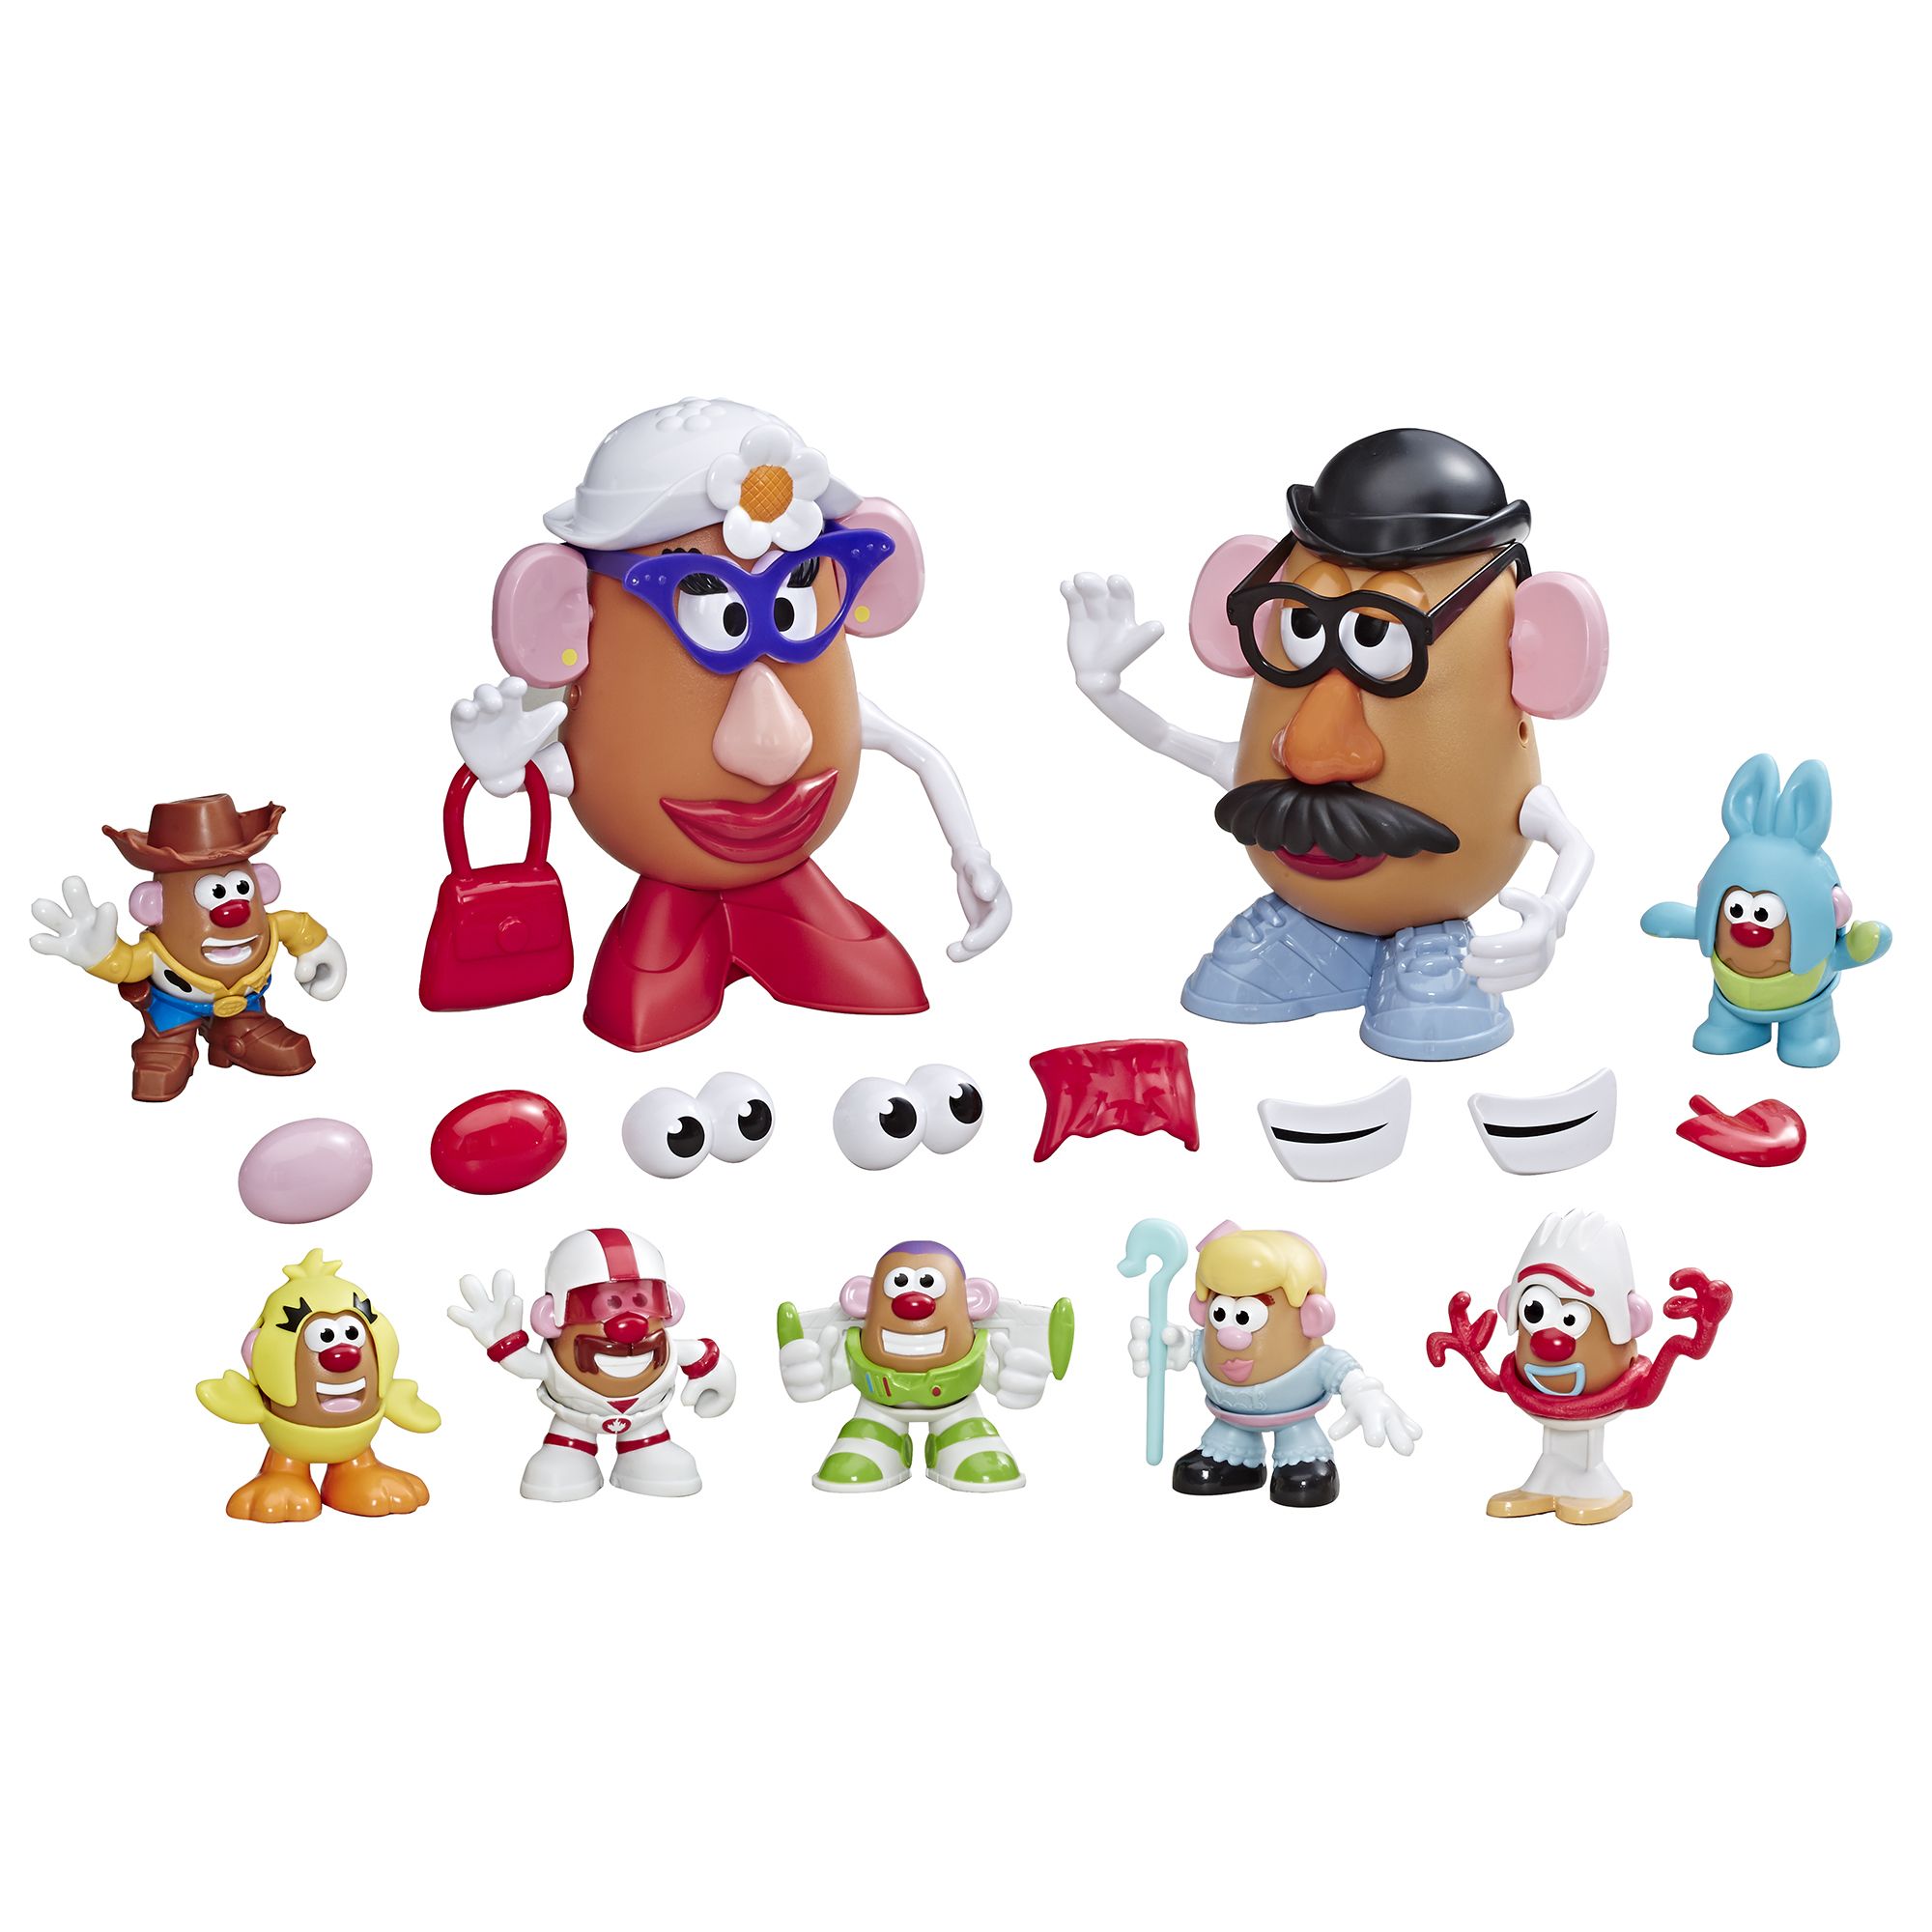 Mr Potato Head Toy Story 4 Toy